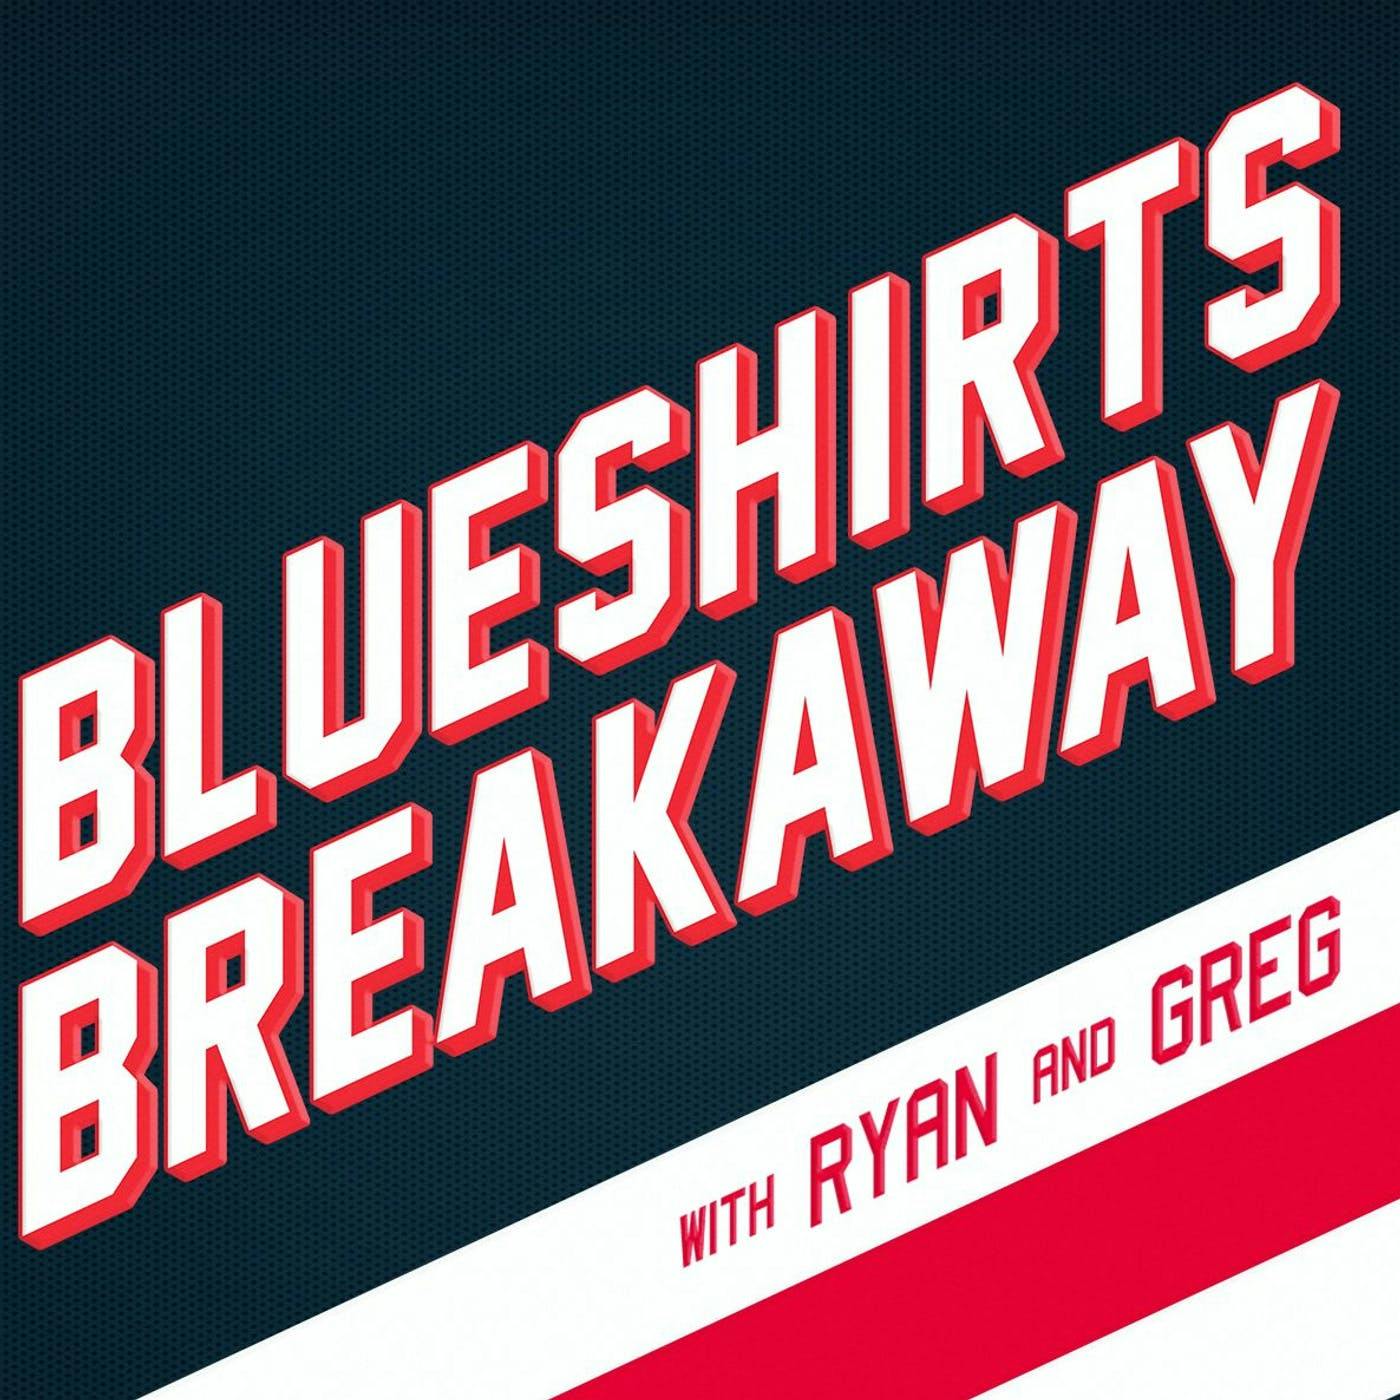 Blueshirts Breakaway Bonus Baseball Over/Under and Season Preview